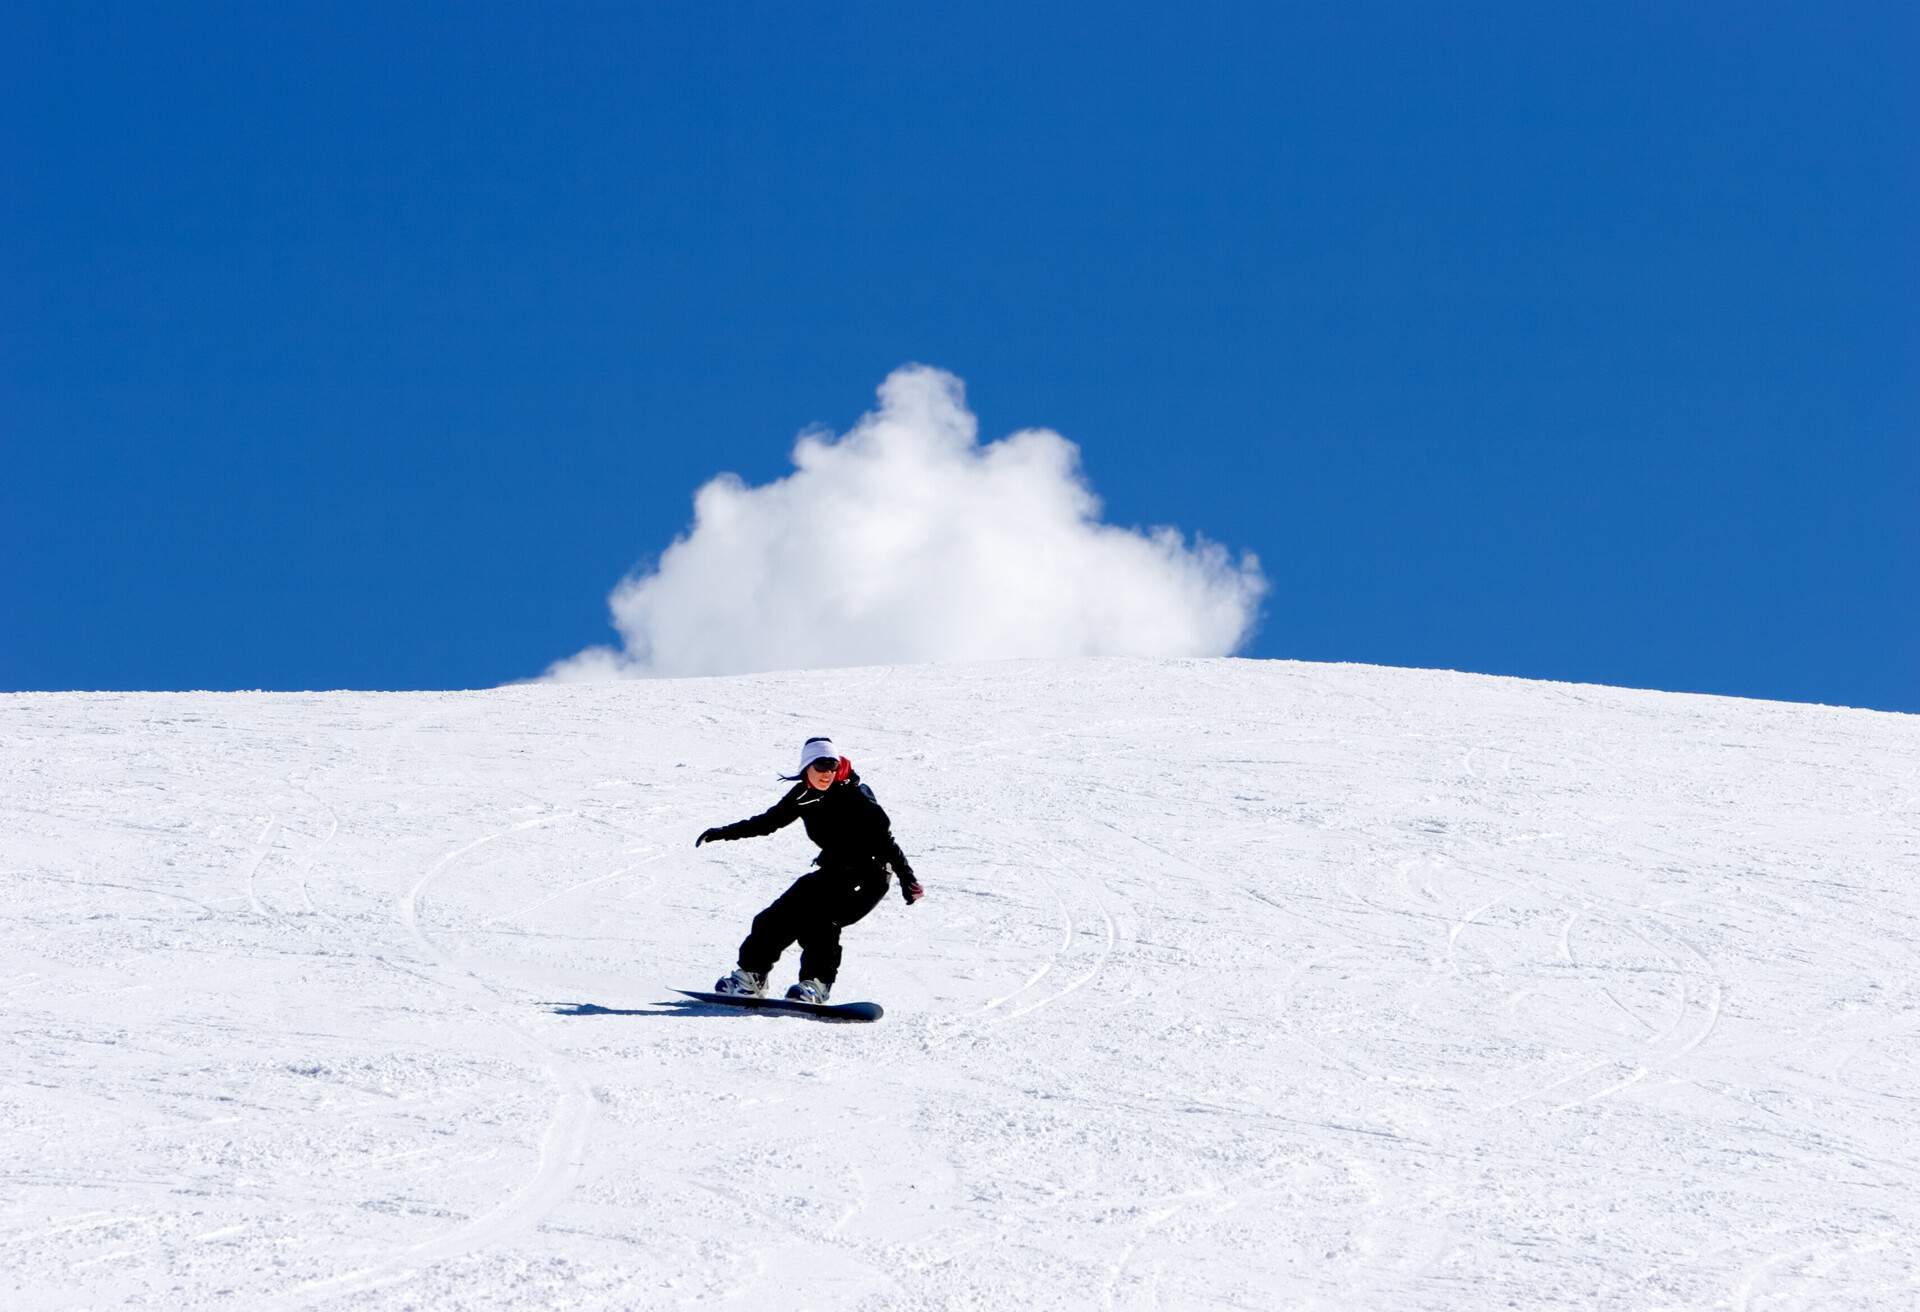 Snowy ski slopes of Pradollano ski resort in the Sierra Nevada mountains in Spain with woman snowboarding; Shutterstock ID 1193340; Purpose: ; Brand (KAYAK, Momondo, Any):